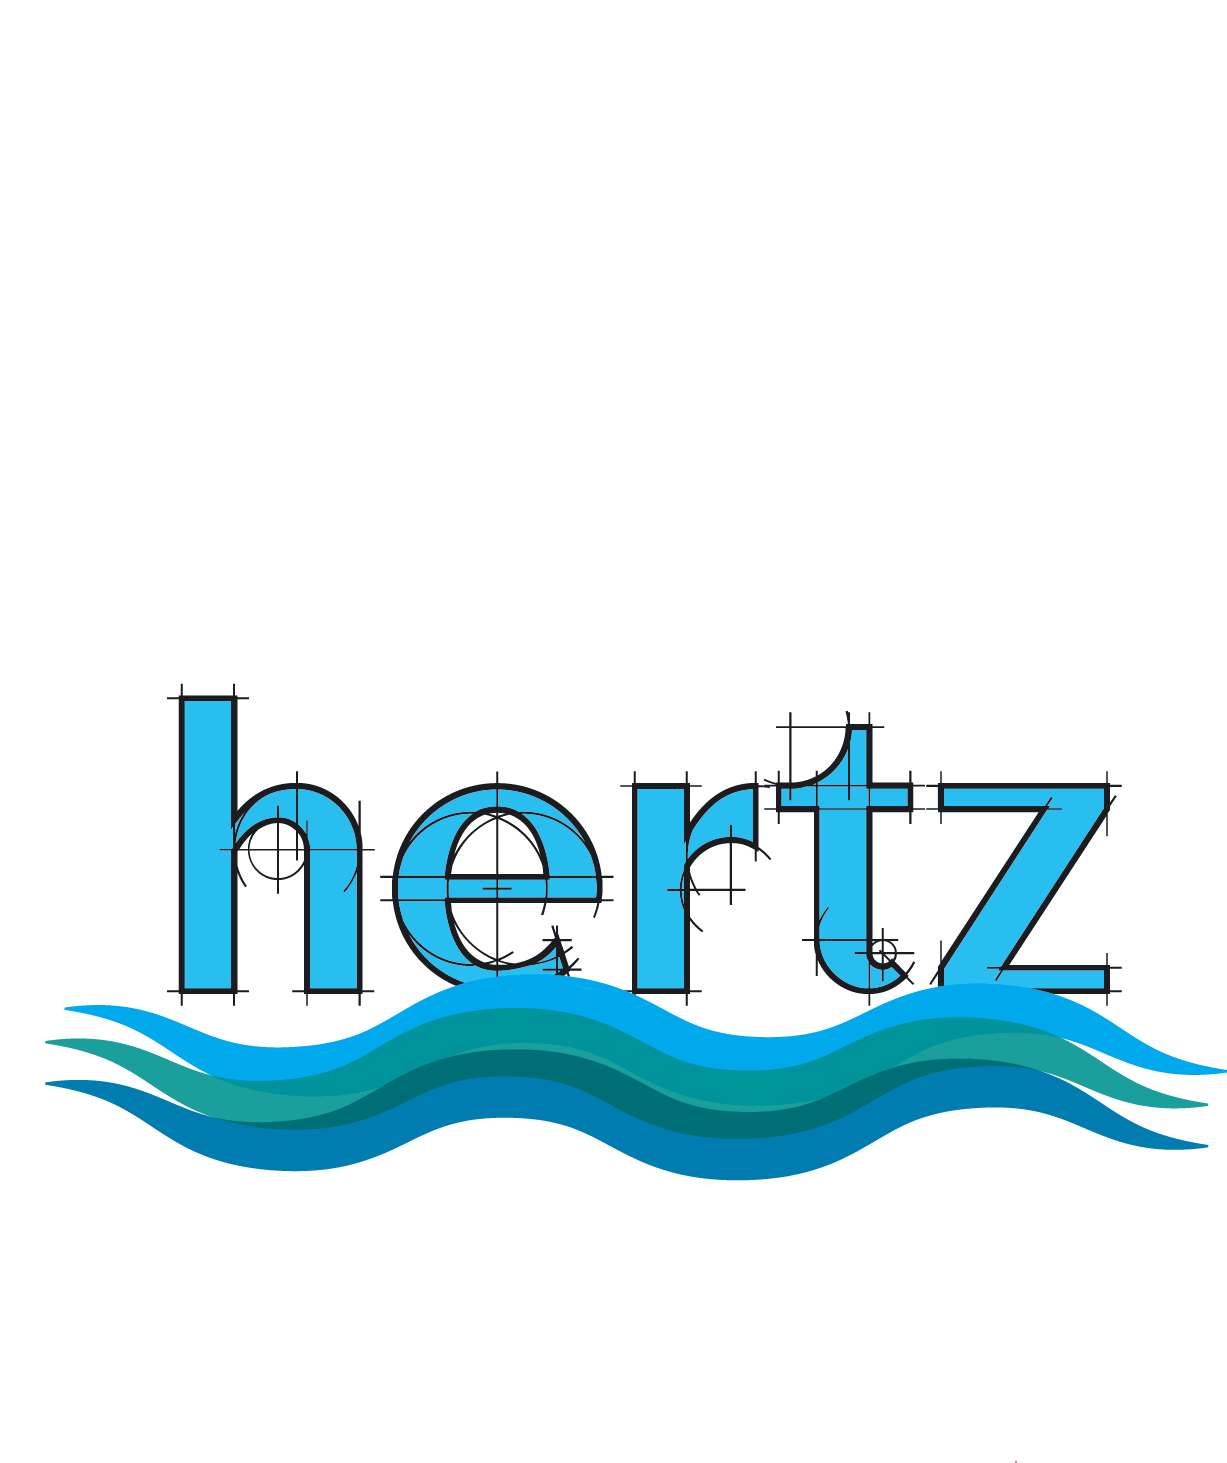 Hertz logo.png